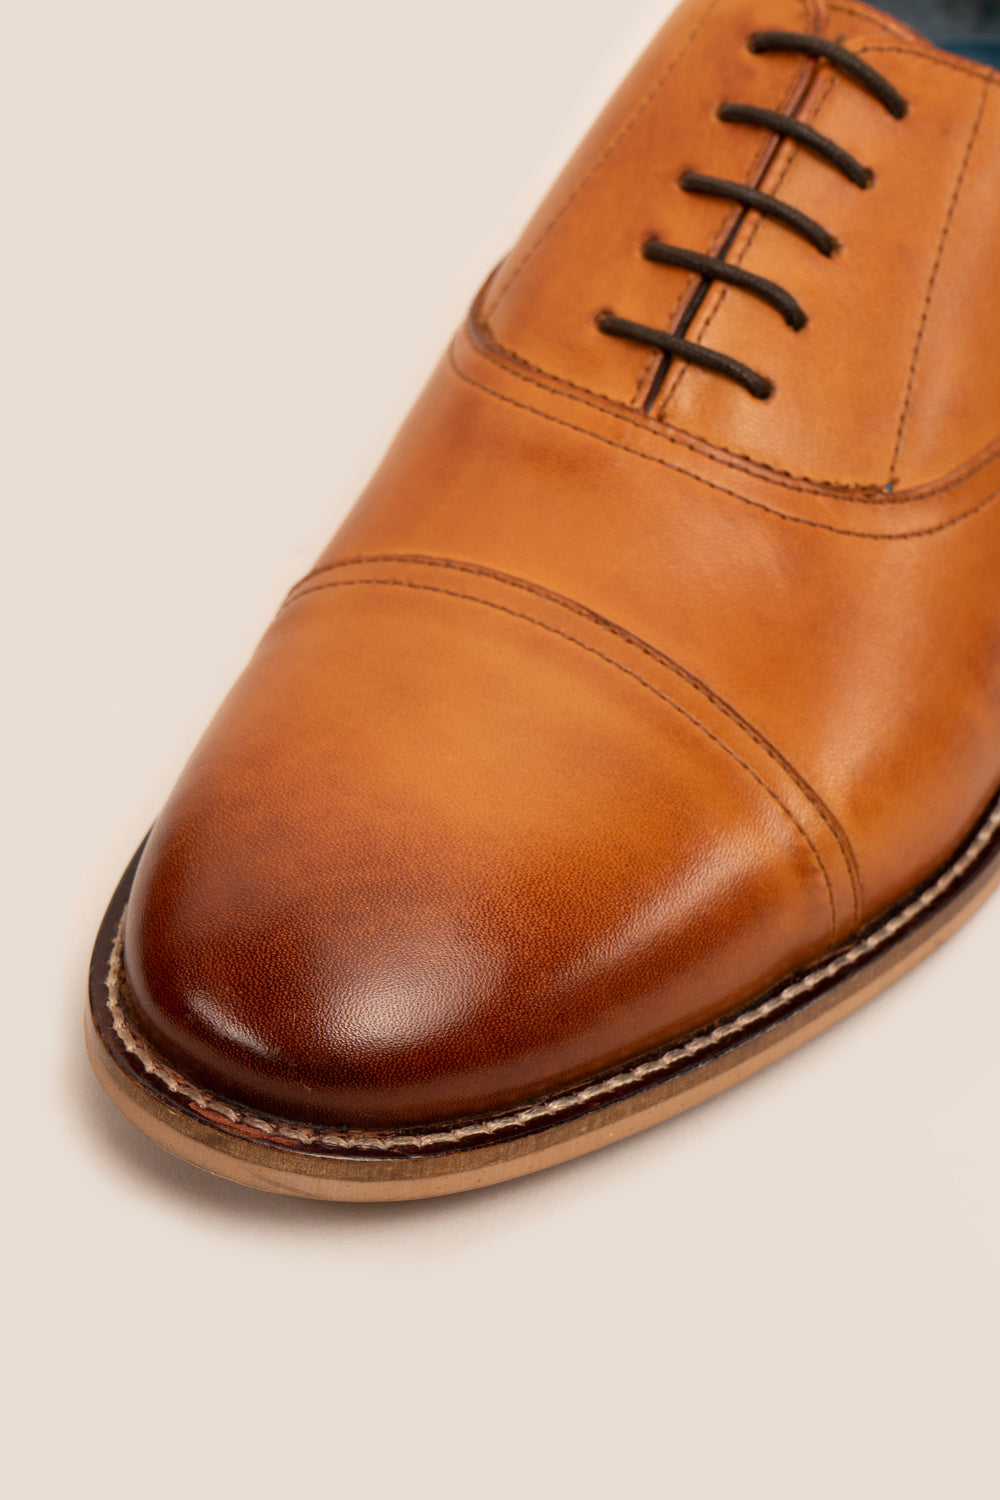 Oswin Hyde Tan Leather Toecap Oxford shoe